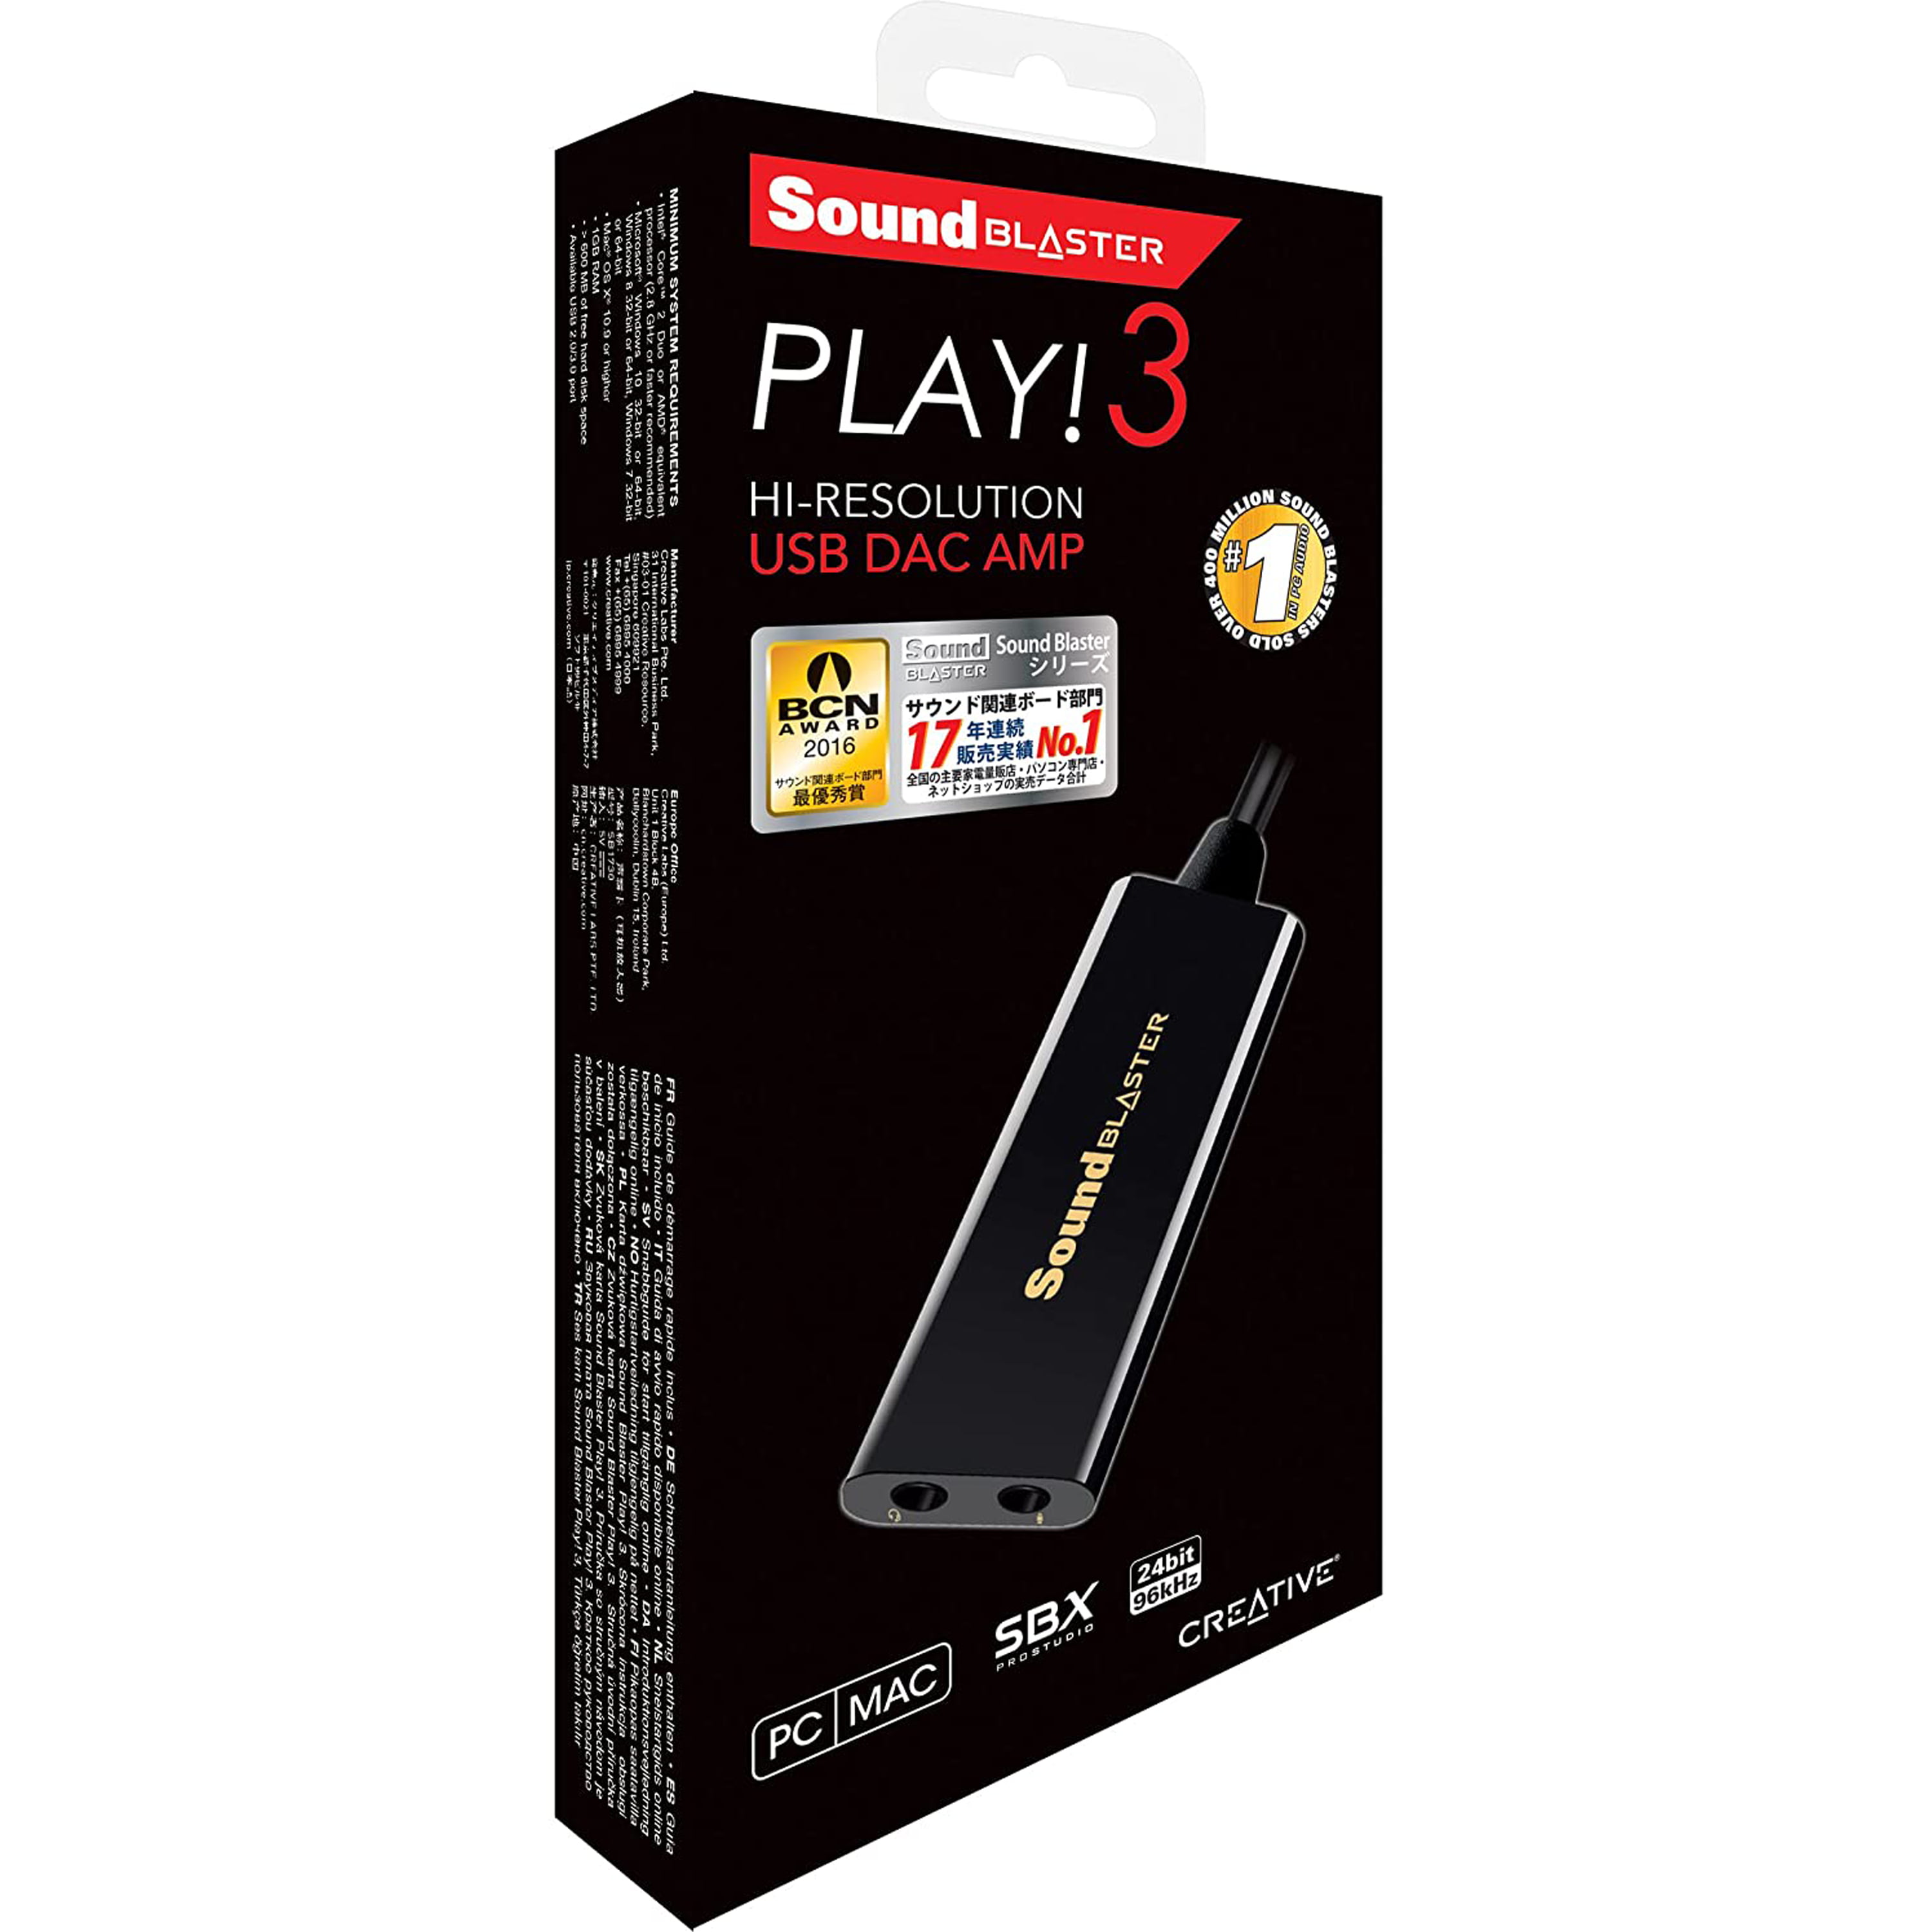 Creative Labs Sound Blaster Play 3 Usb Dac Amp And External Sound Card Walmart Com Walmart Com